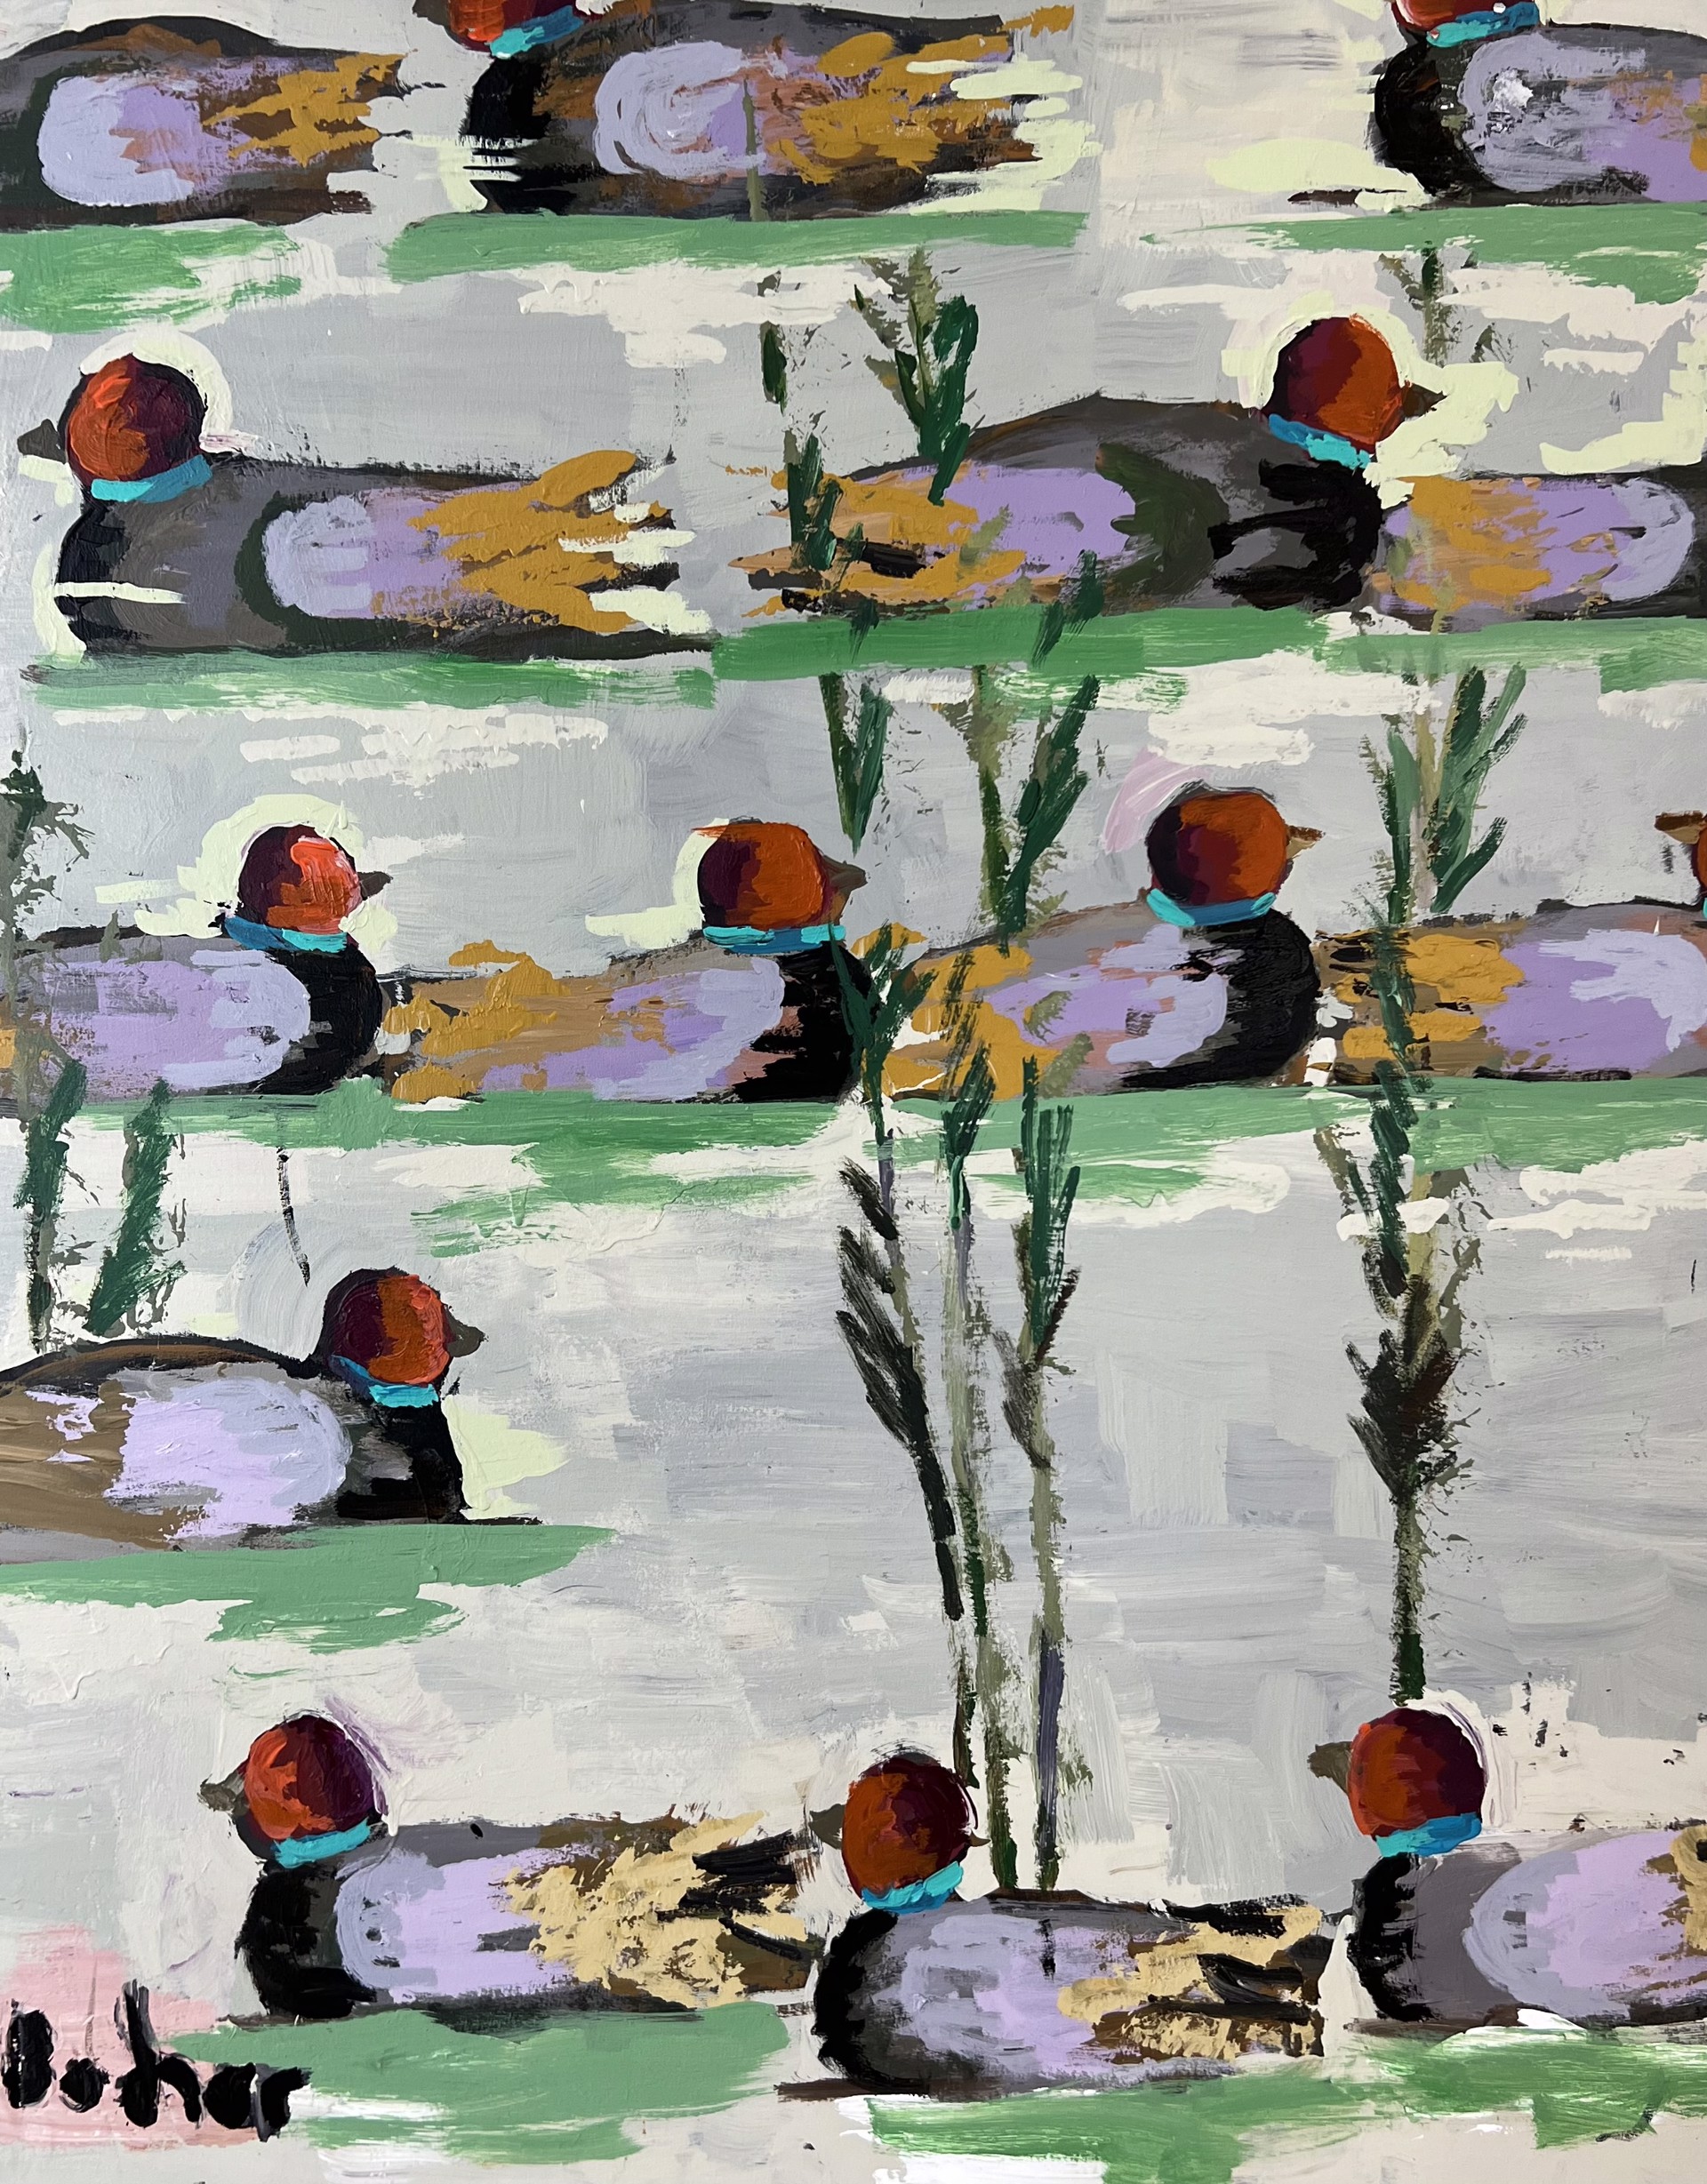 Ducks in a Row by Gary Bodner